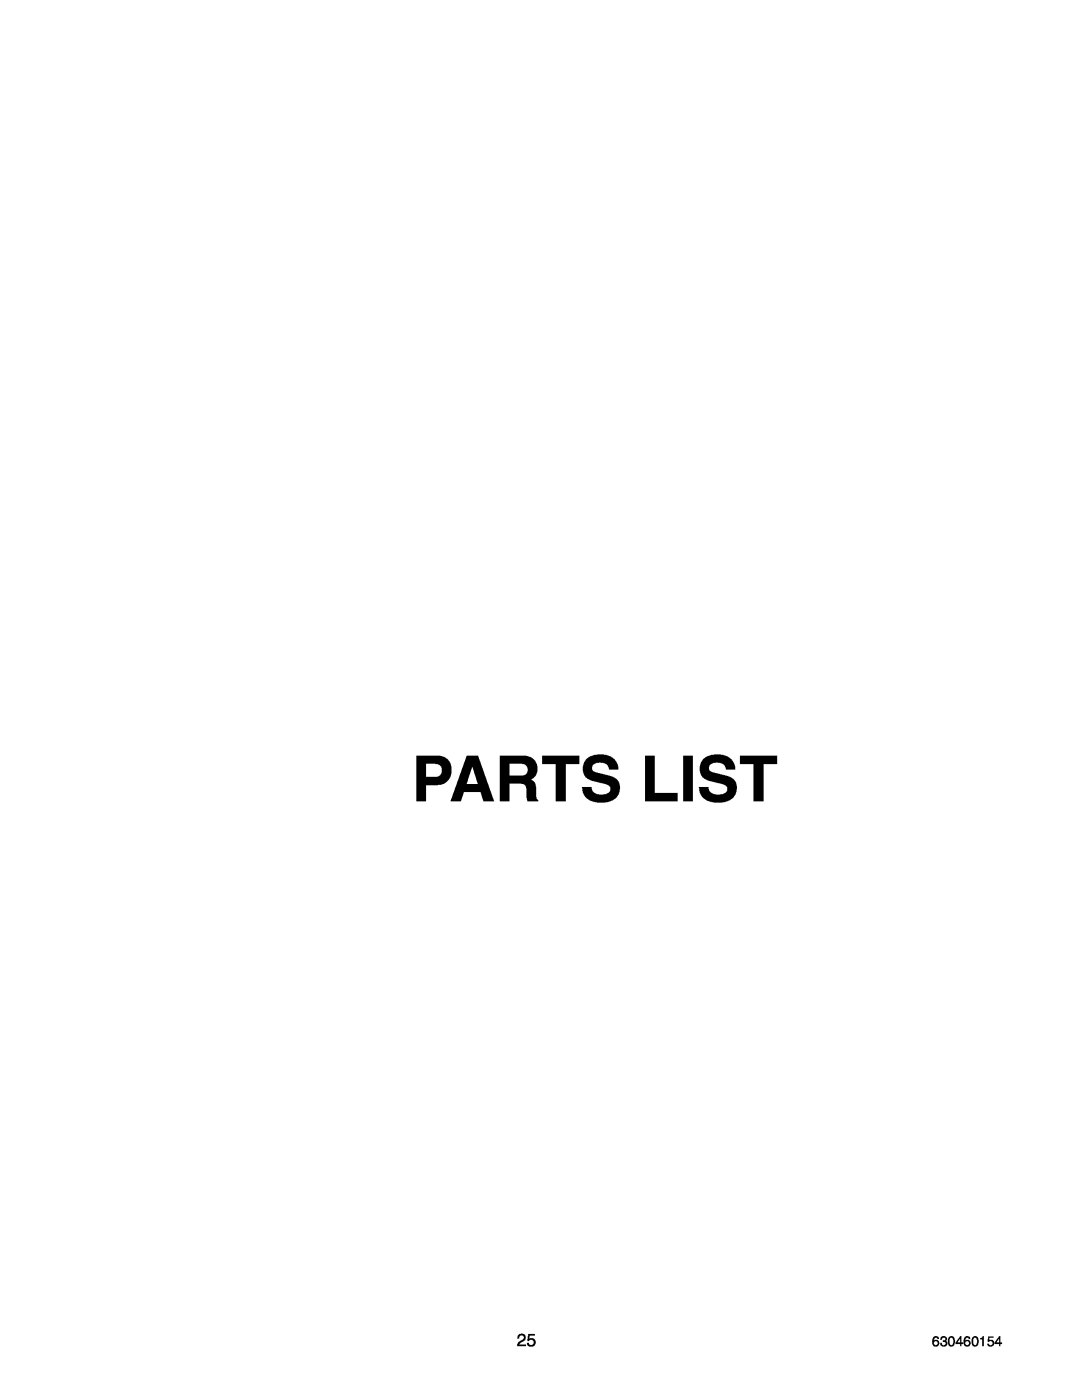 Cornelius UCR 700 Series service manual Parts List 